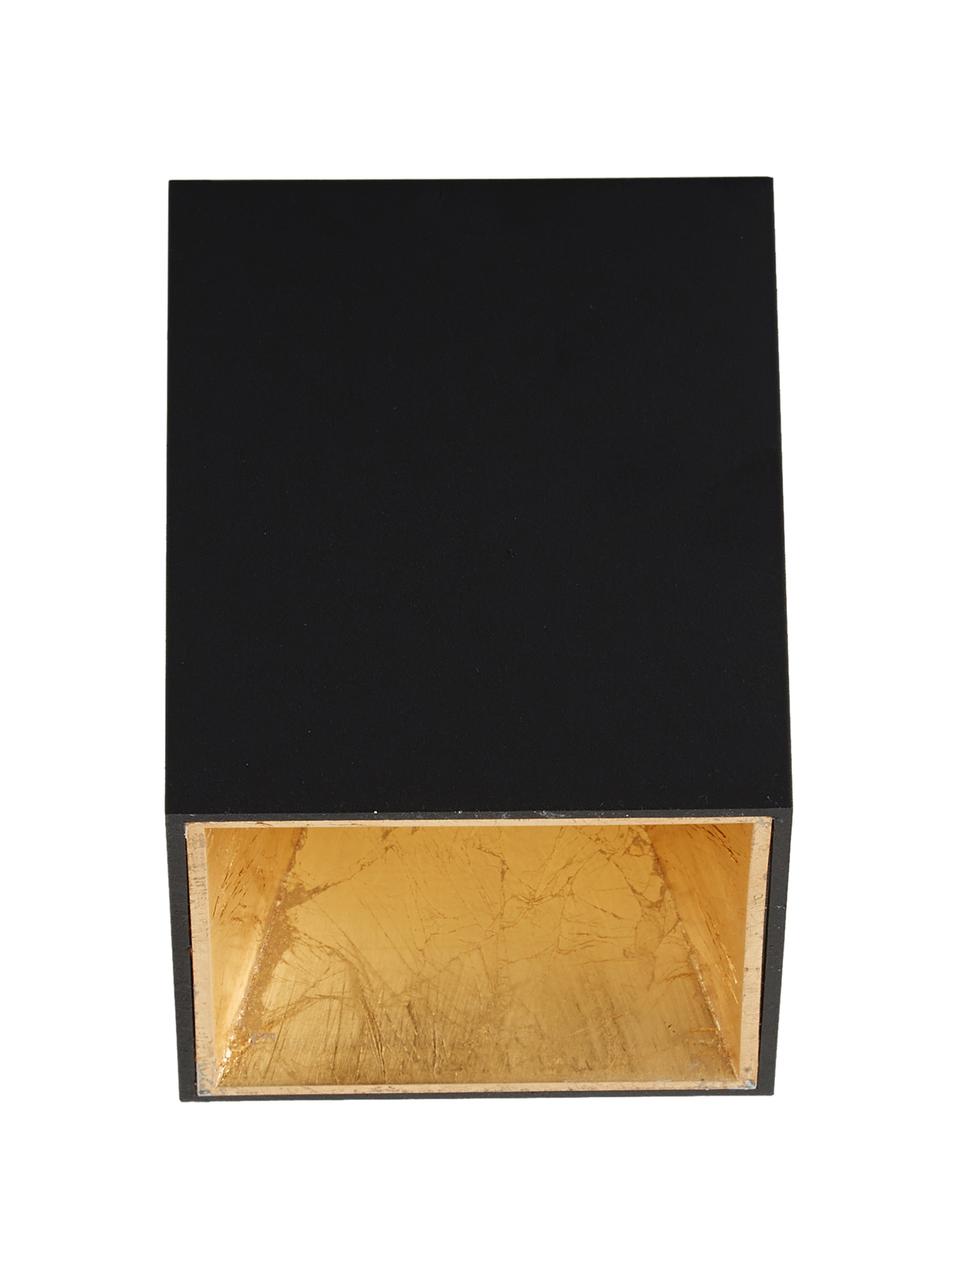 LED plafondspot Marty in zwart-goudkleur met antieke afwerking, Zwart, goudkleurig, B 10 x H 12 cm